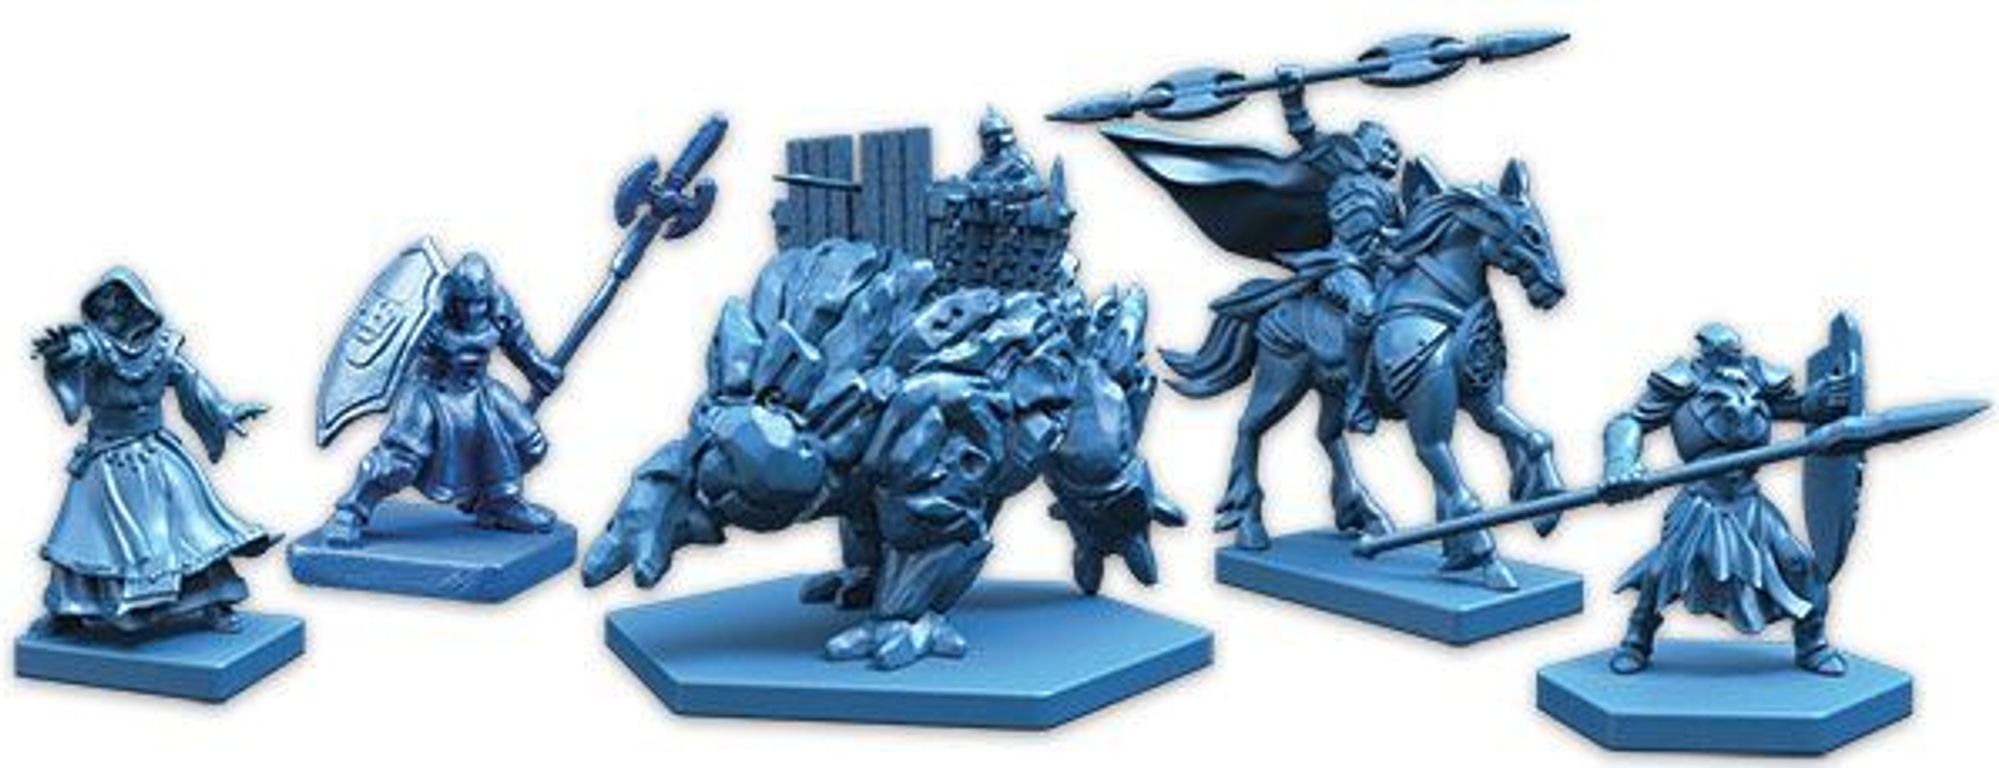 BattleLore (Second Edition): Hernfar Guardians Army Pack miniatures